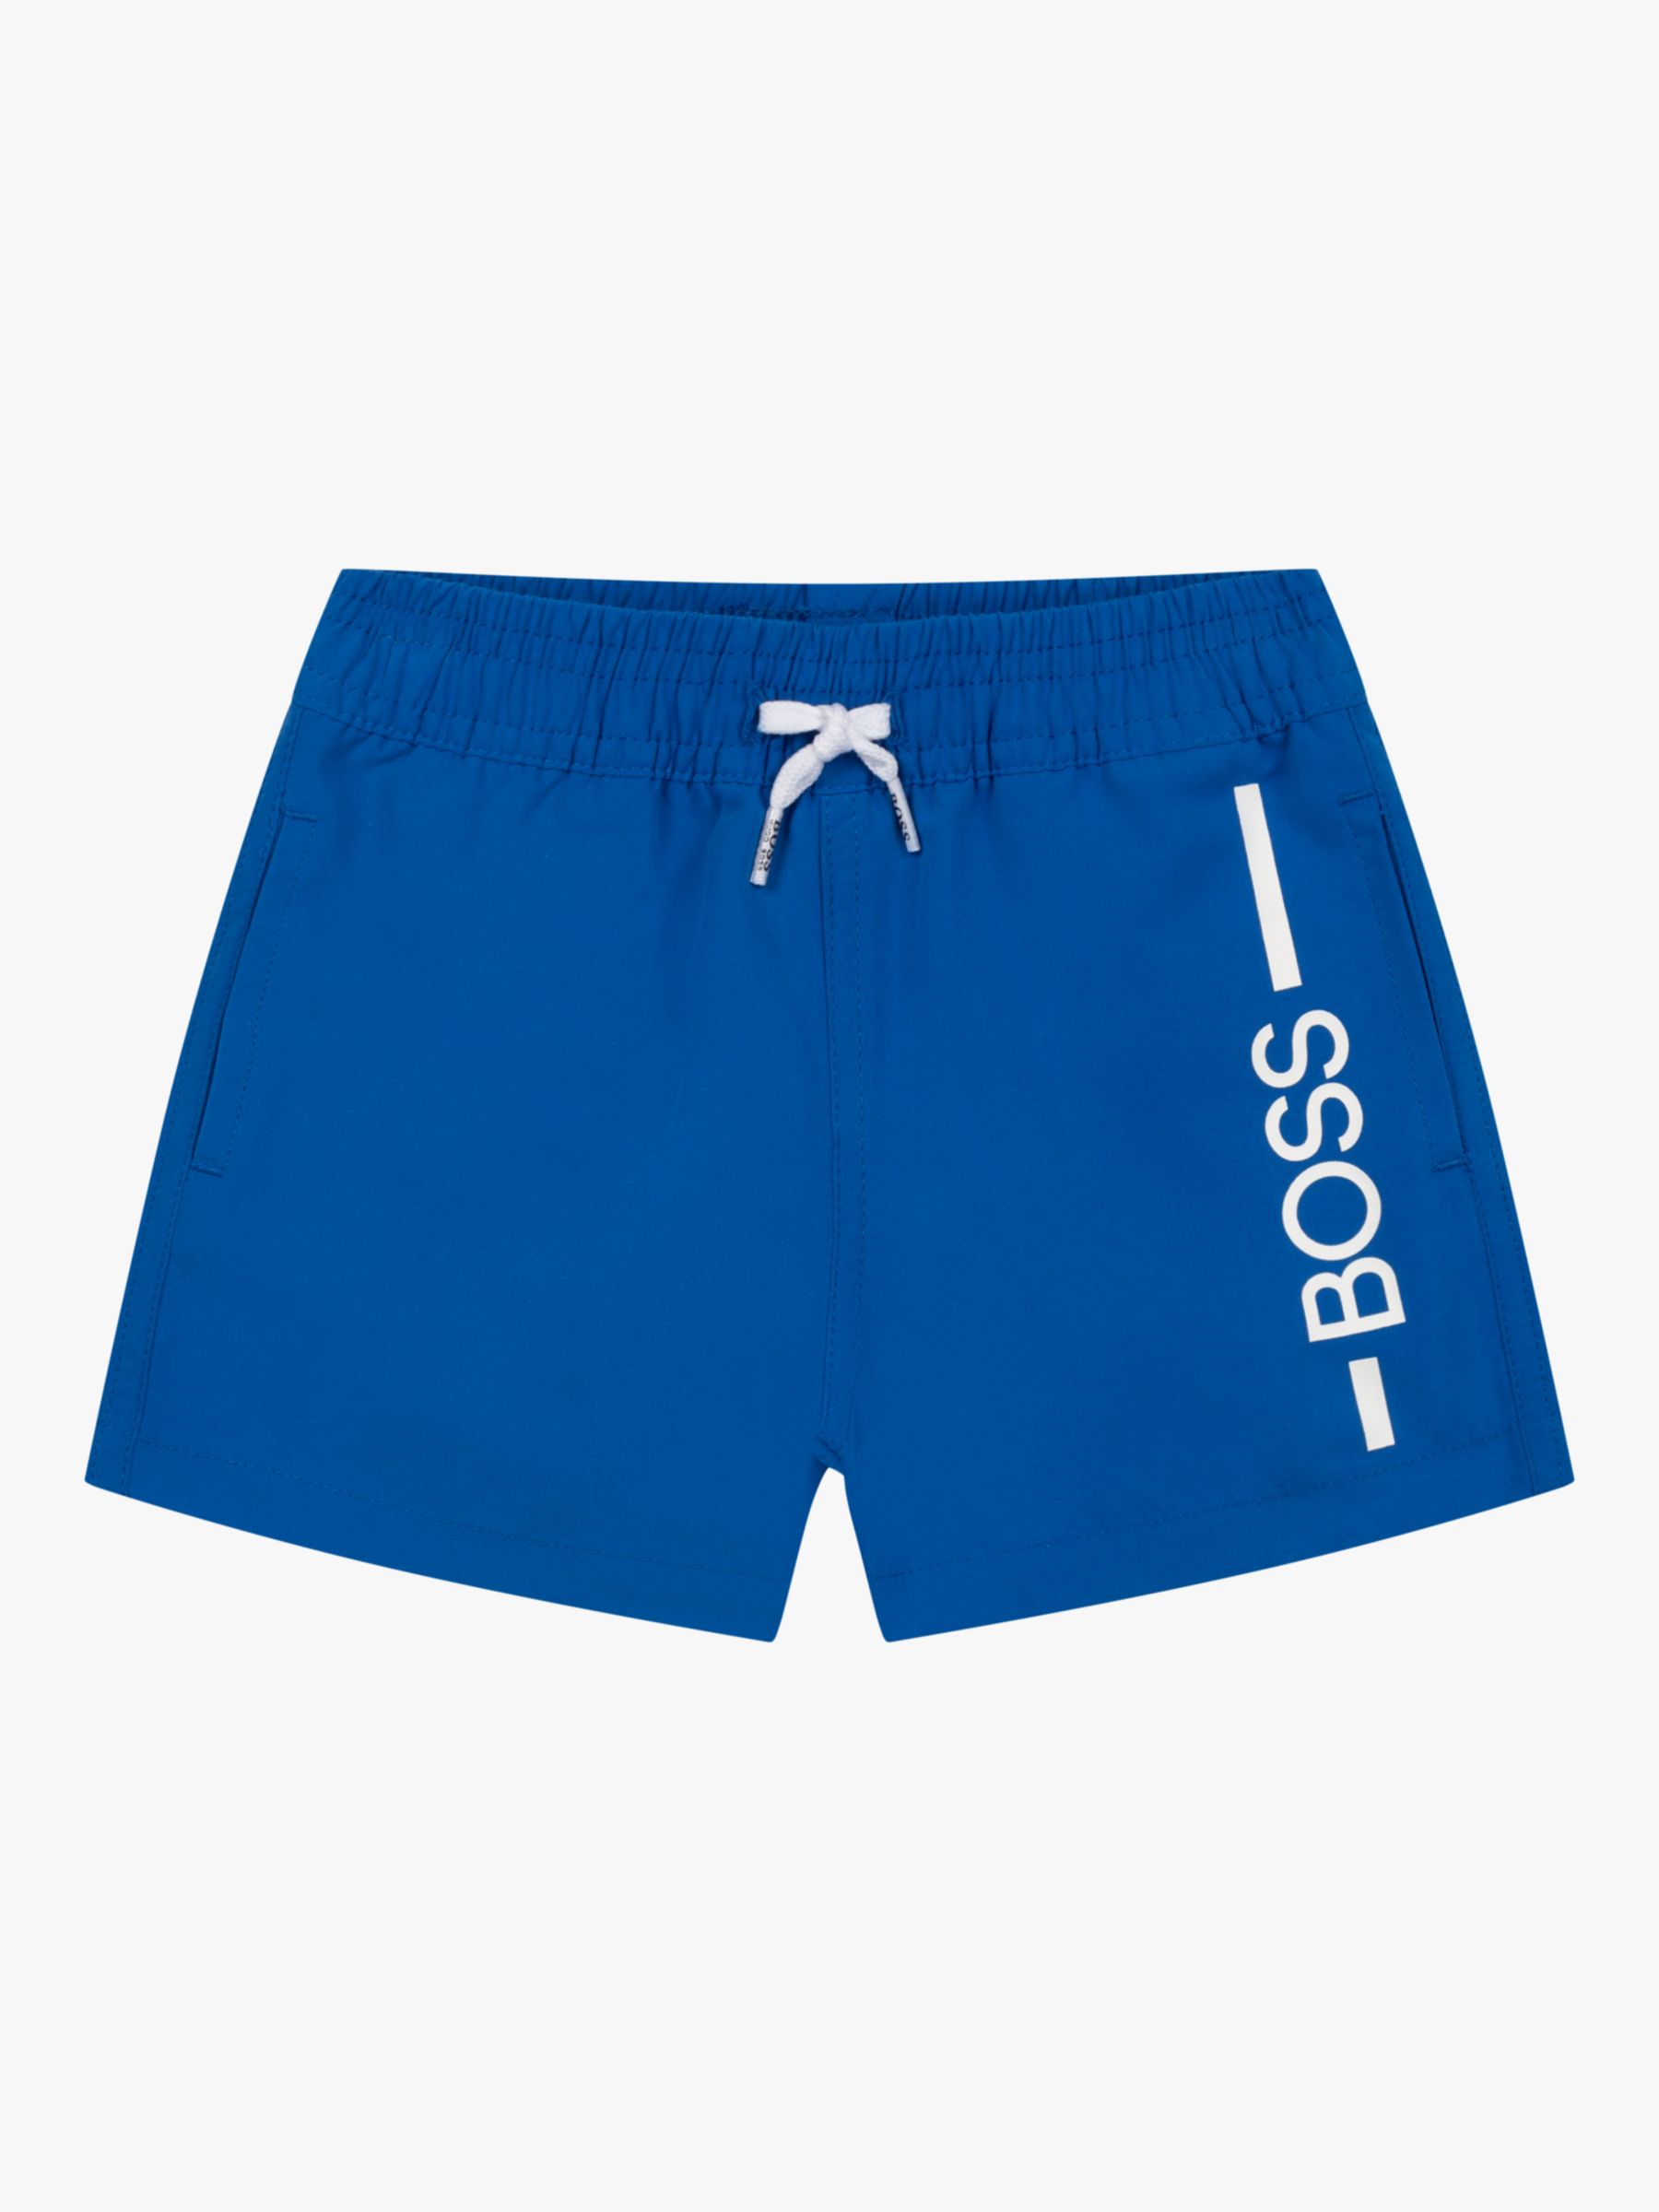 HUGO BOSS Baby Logo Swim Shorts, Bleu Royal